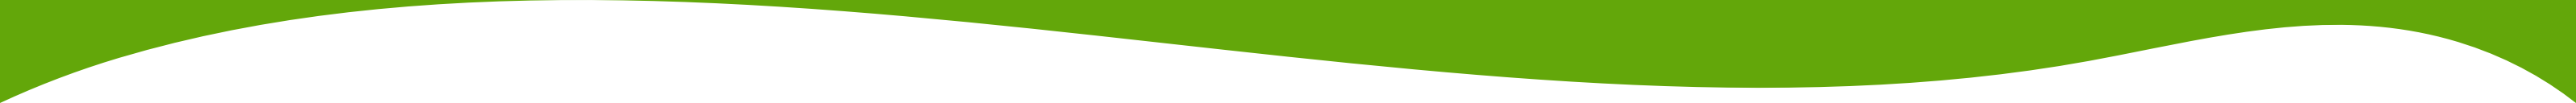 onda verde e branca